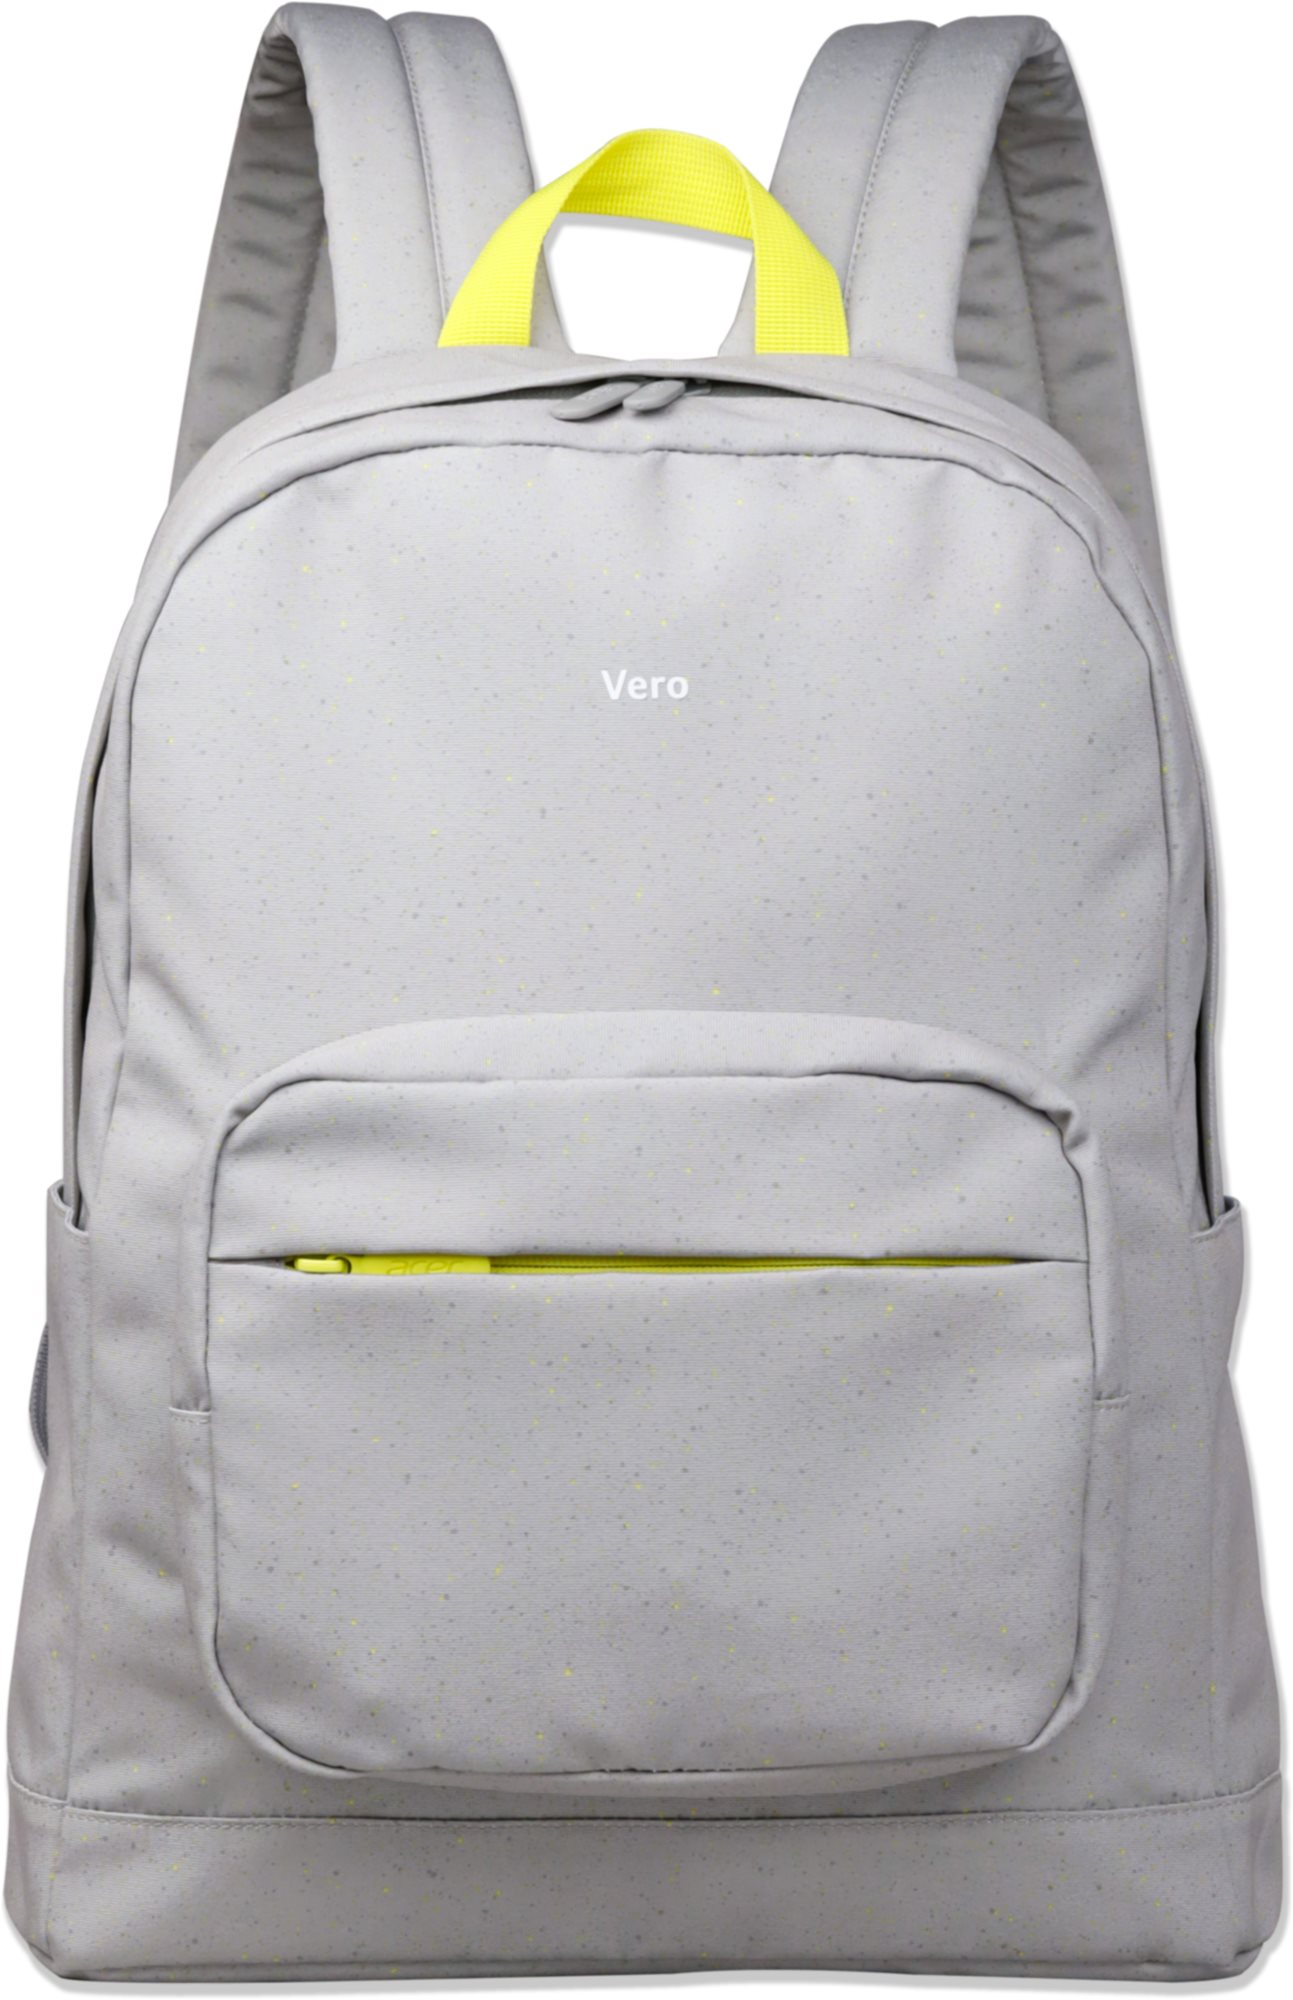 Acer Vero Backpack 15.6